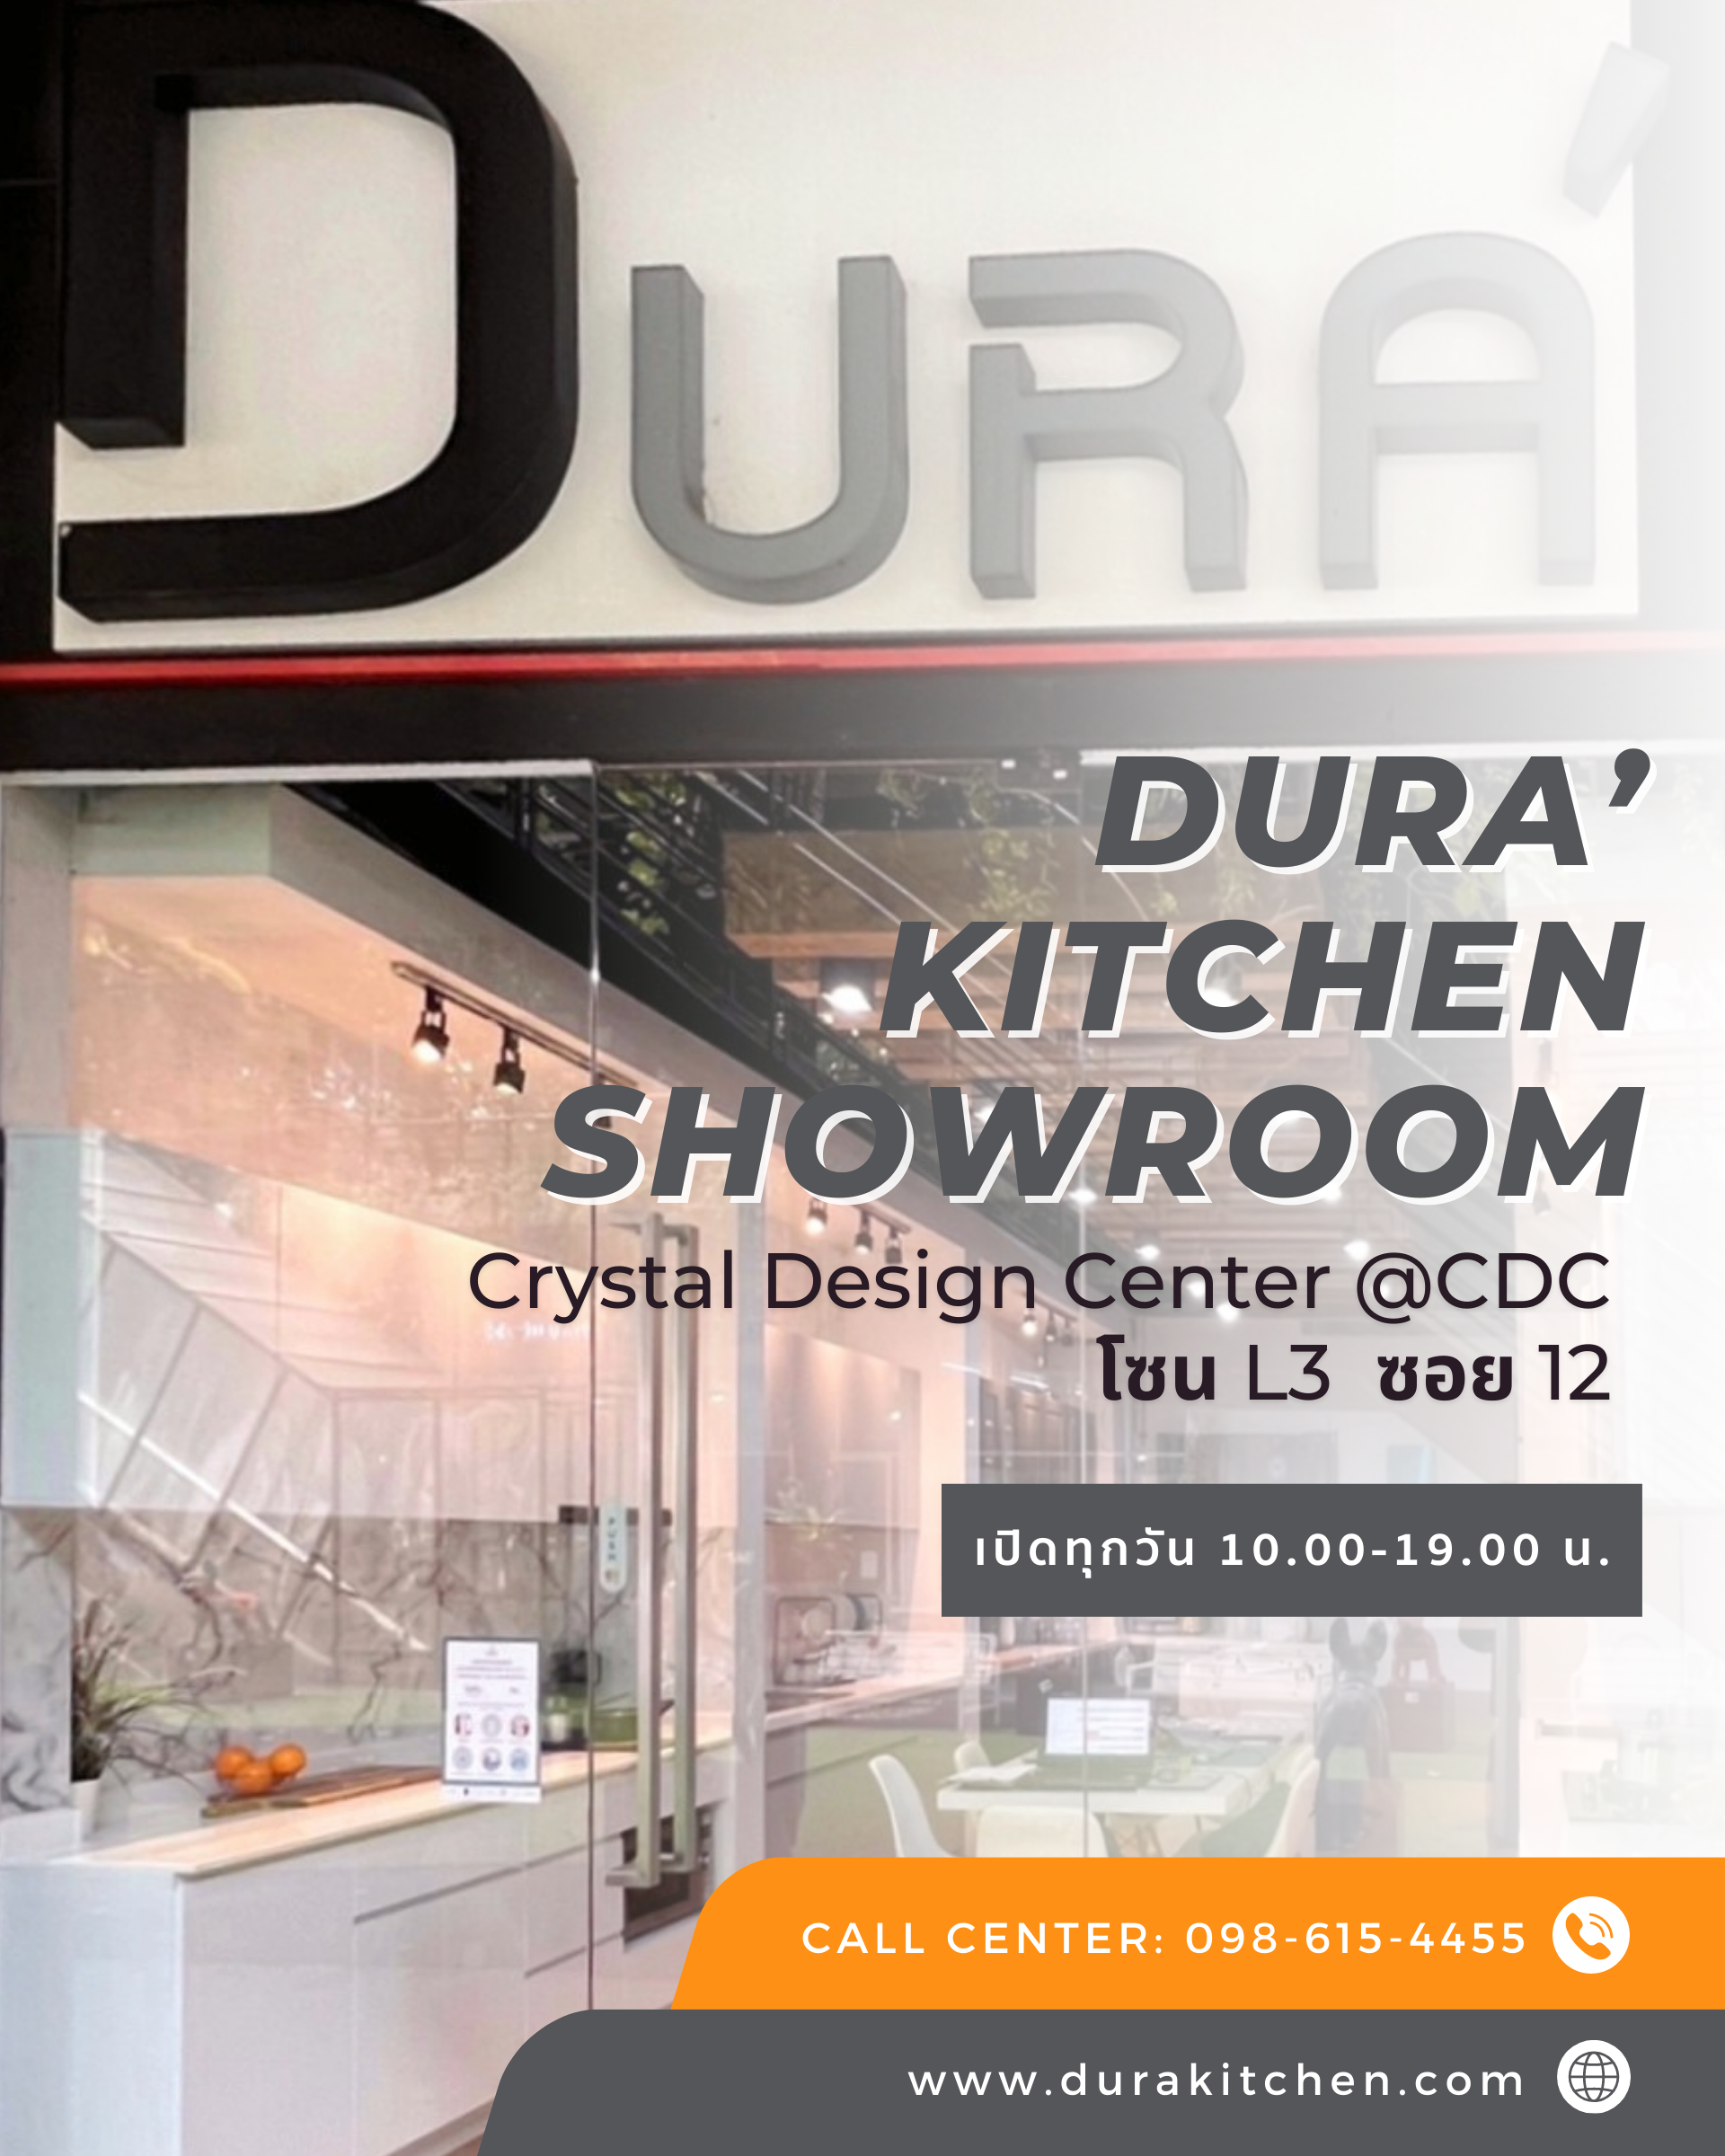 Dura’ Kitchen Showroom @CDC  